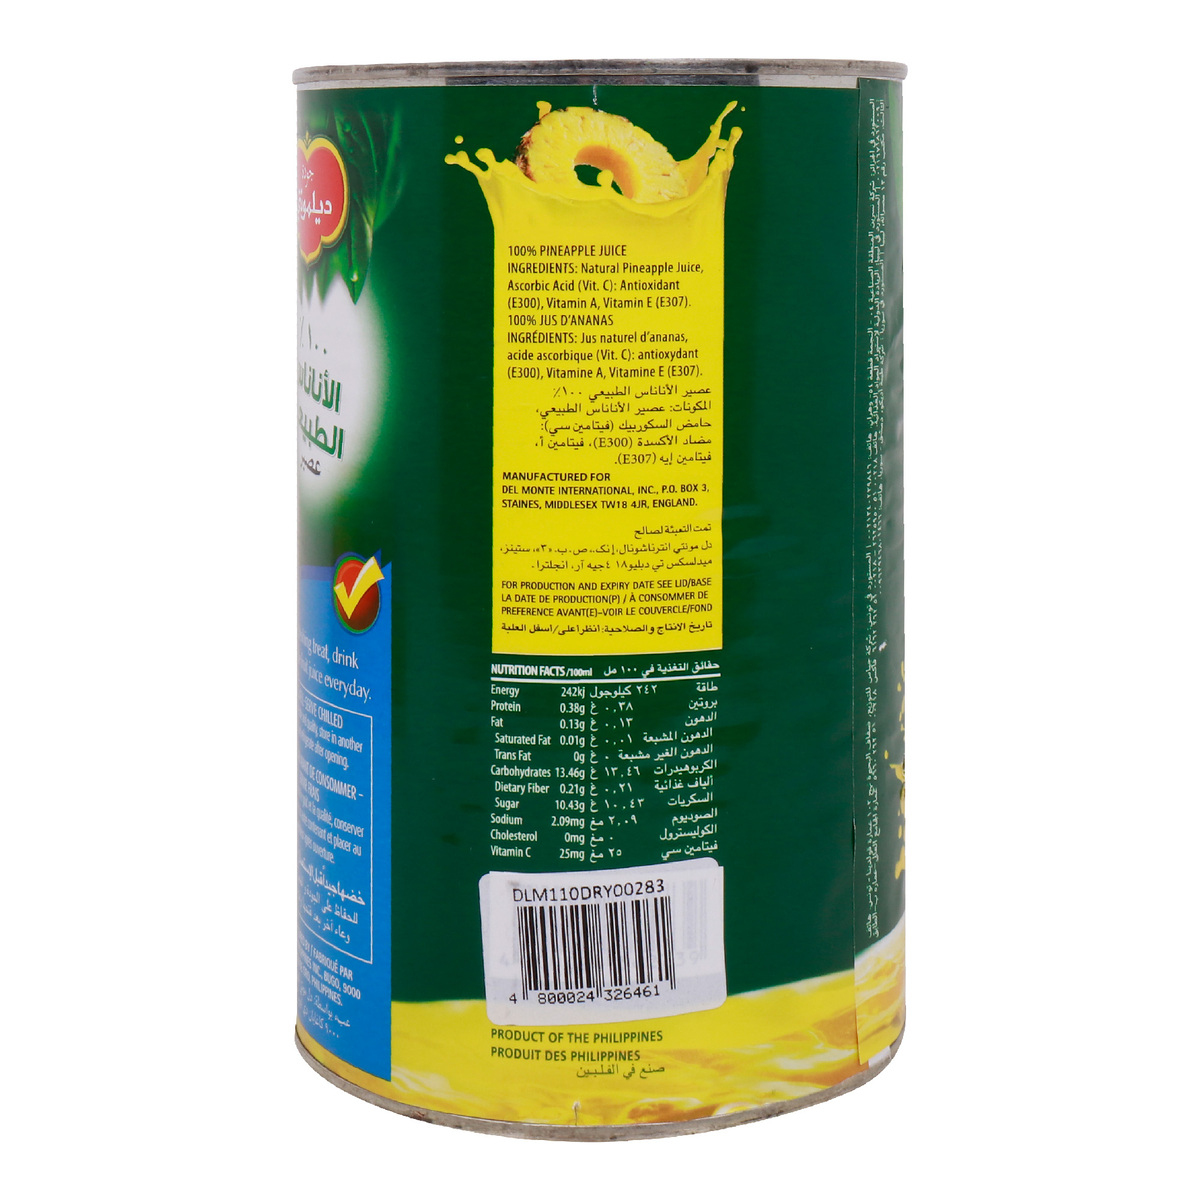 Del Monte Pineapple Juice Value Pack 1.36 Litres